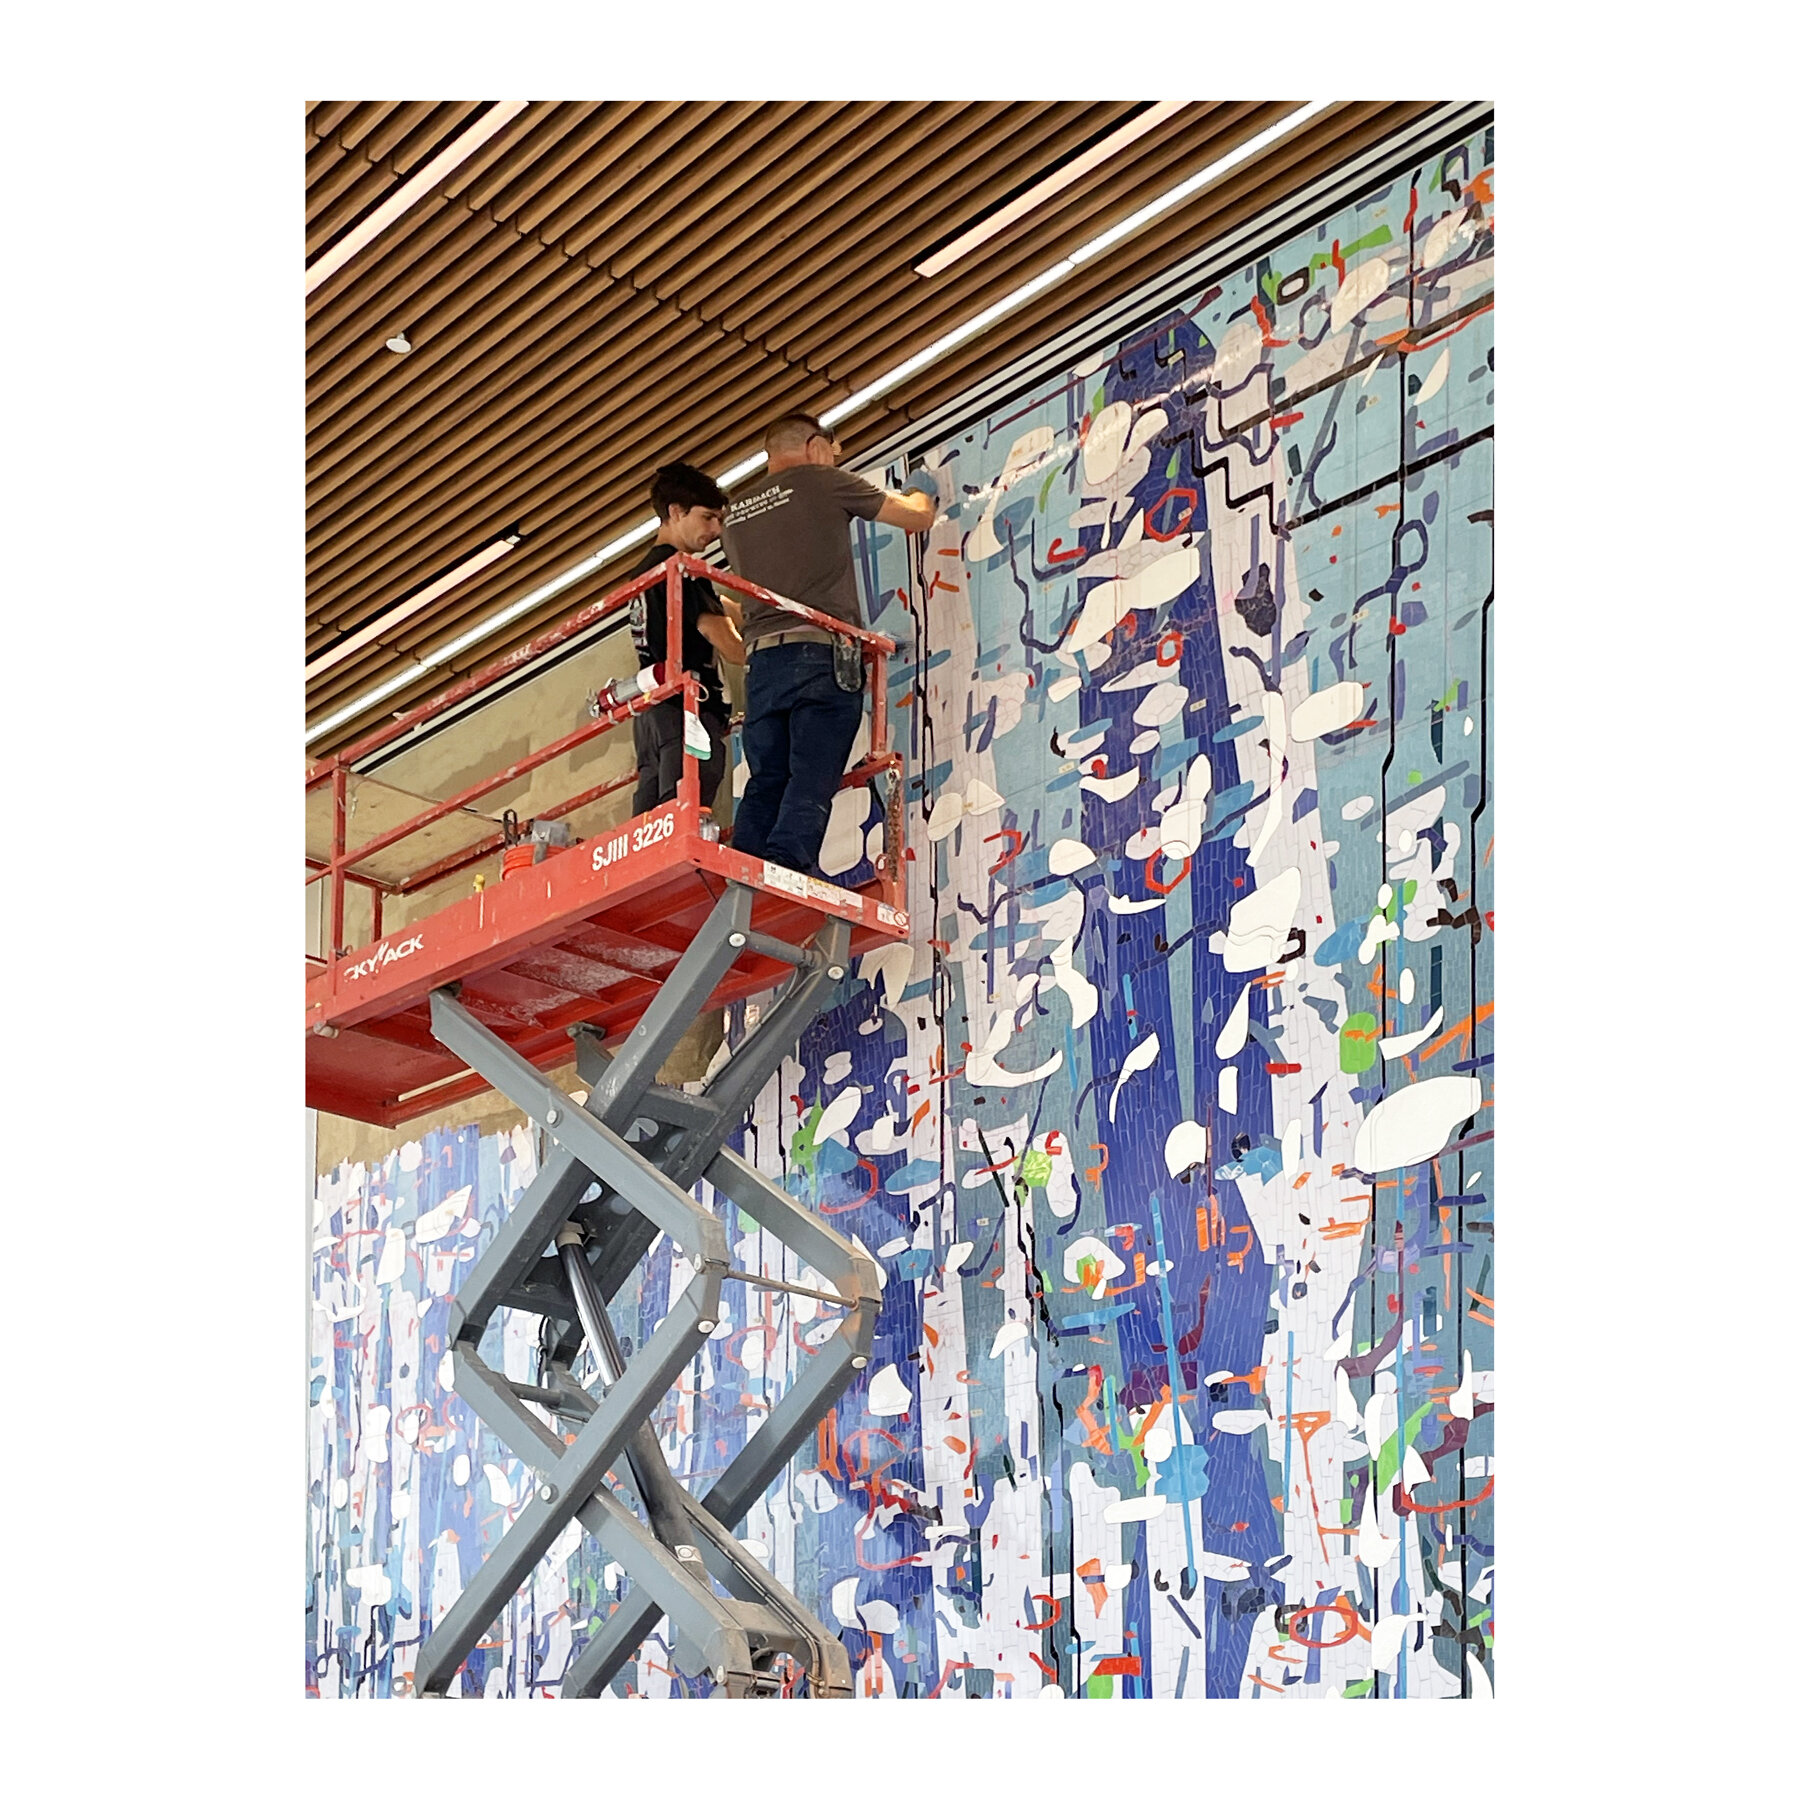  [installation]  Large Variation: Blue,  2021 Ceramic mosaic 26 x 26 feet  Sam Houston State University, College of Osteopathic Medicine Building, Conroe, Texas 